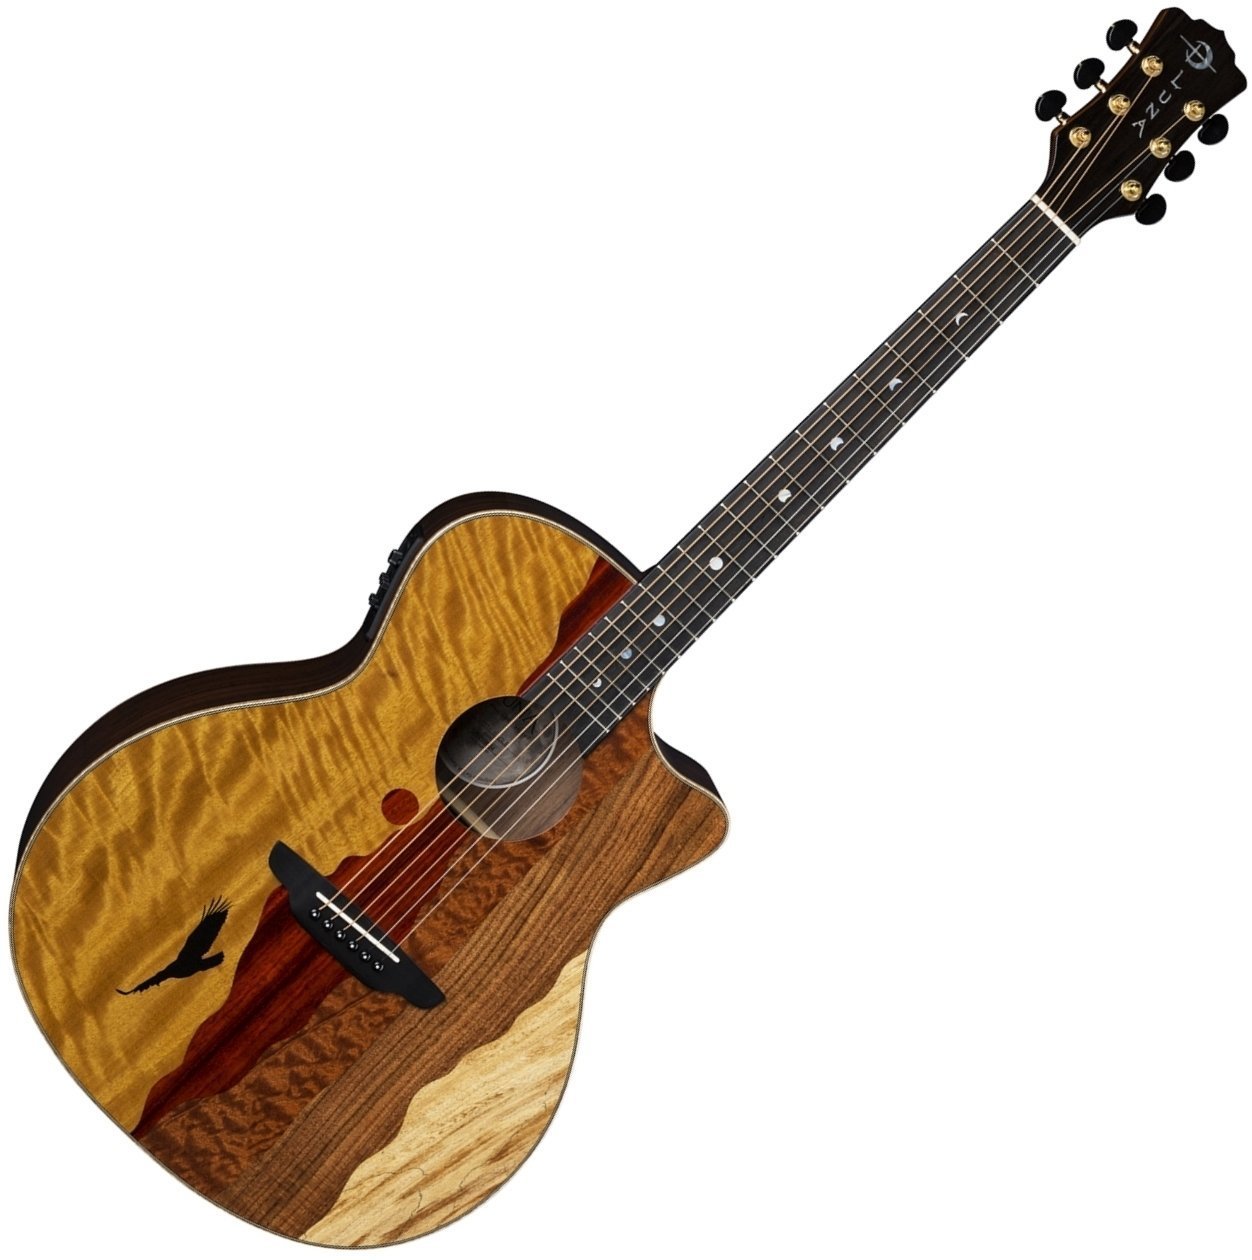 Guitarra electroacustica Luna Vista Eagle Tropical Wood Eagle motif on exotic marquetry